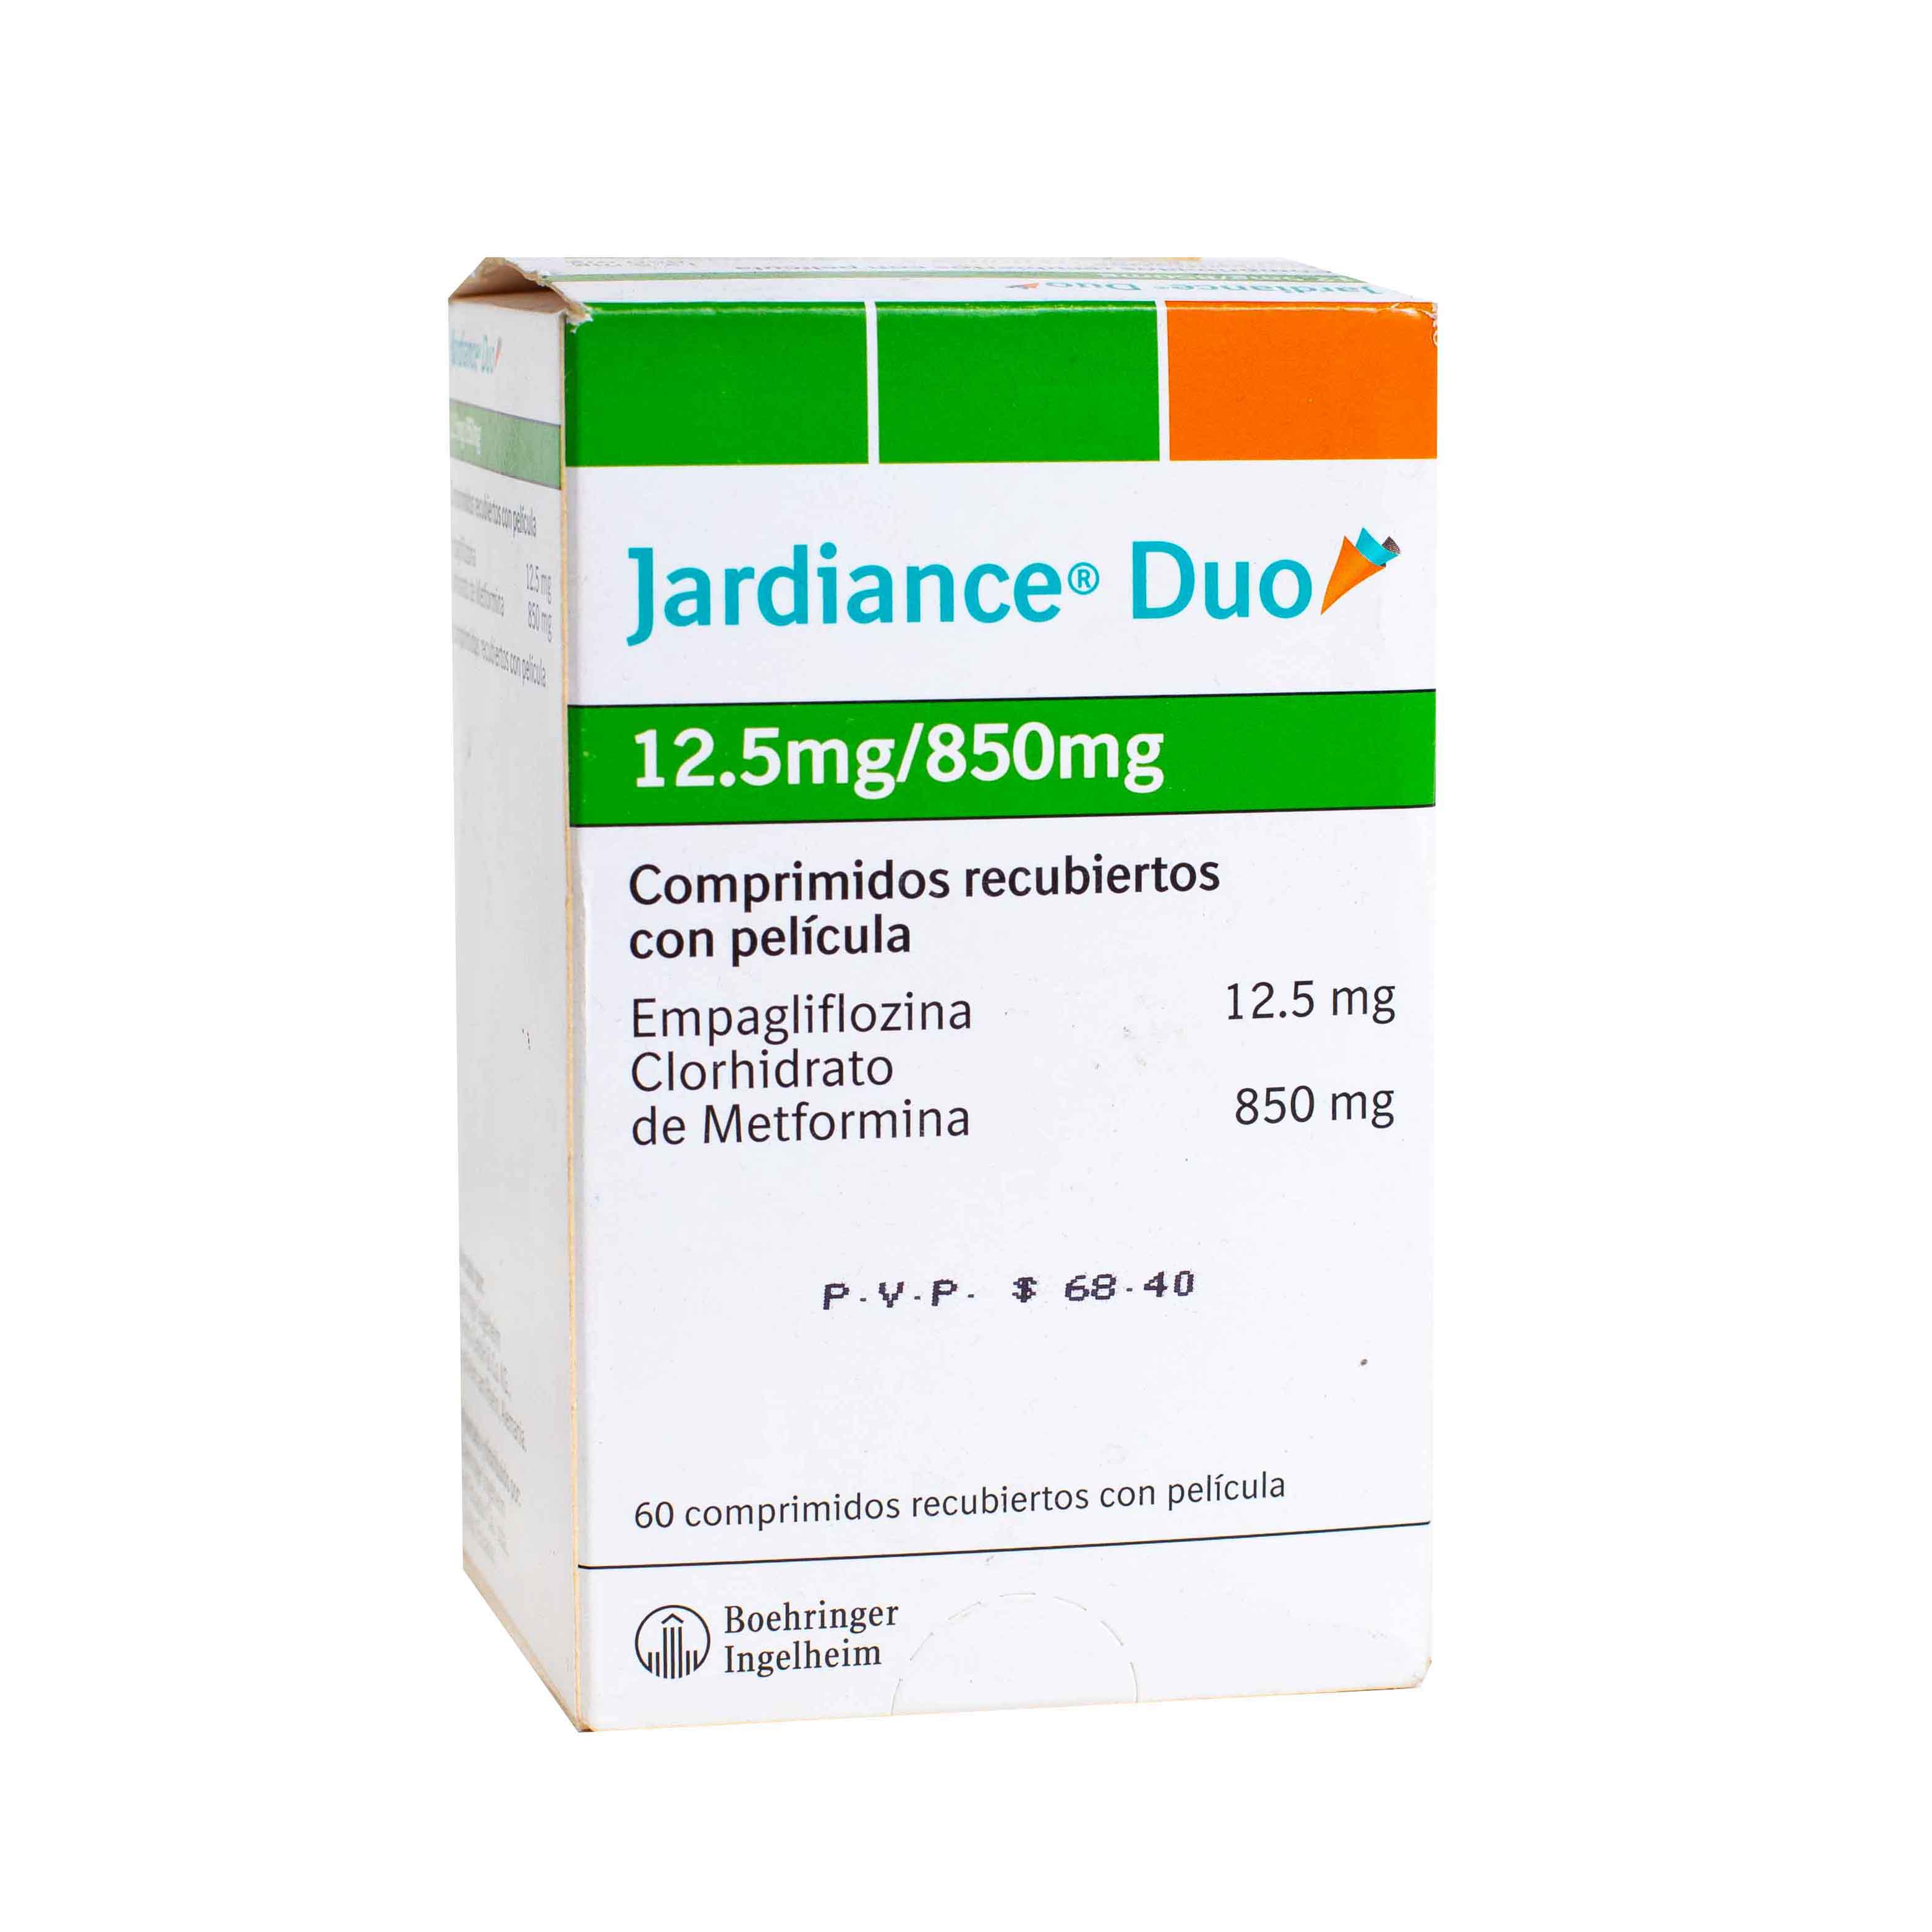 Jardiance Duo